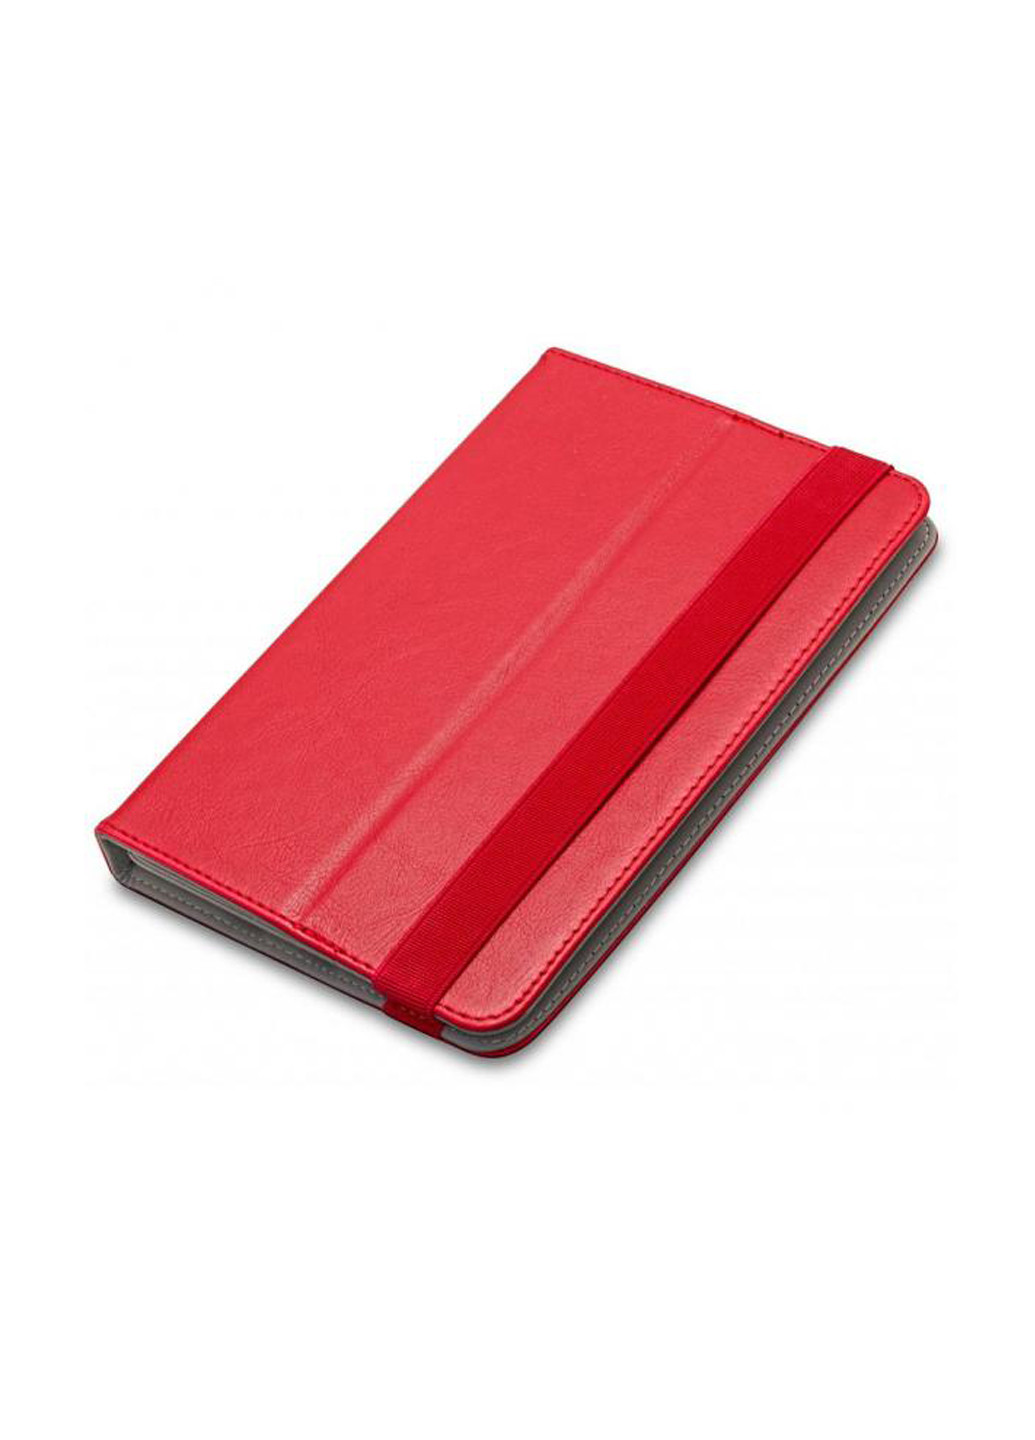 Чохол для планшета Universal case Premium 7-8 red Airon universal case premium 7-8" red (140943636)